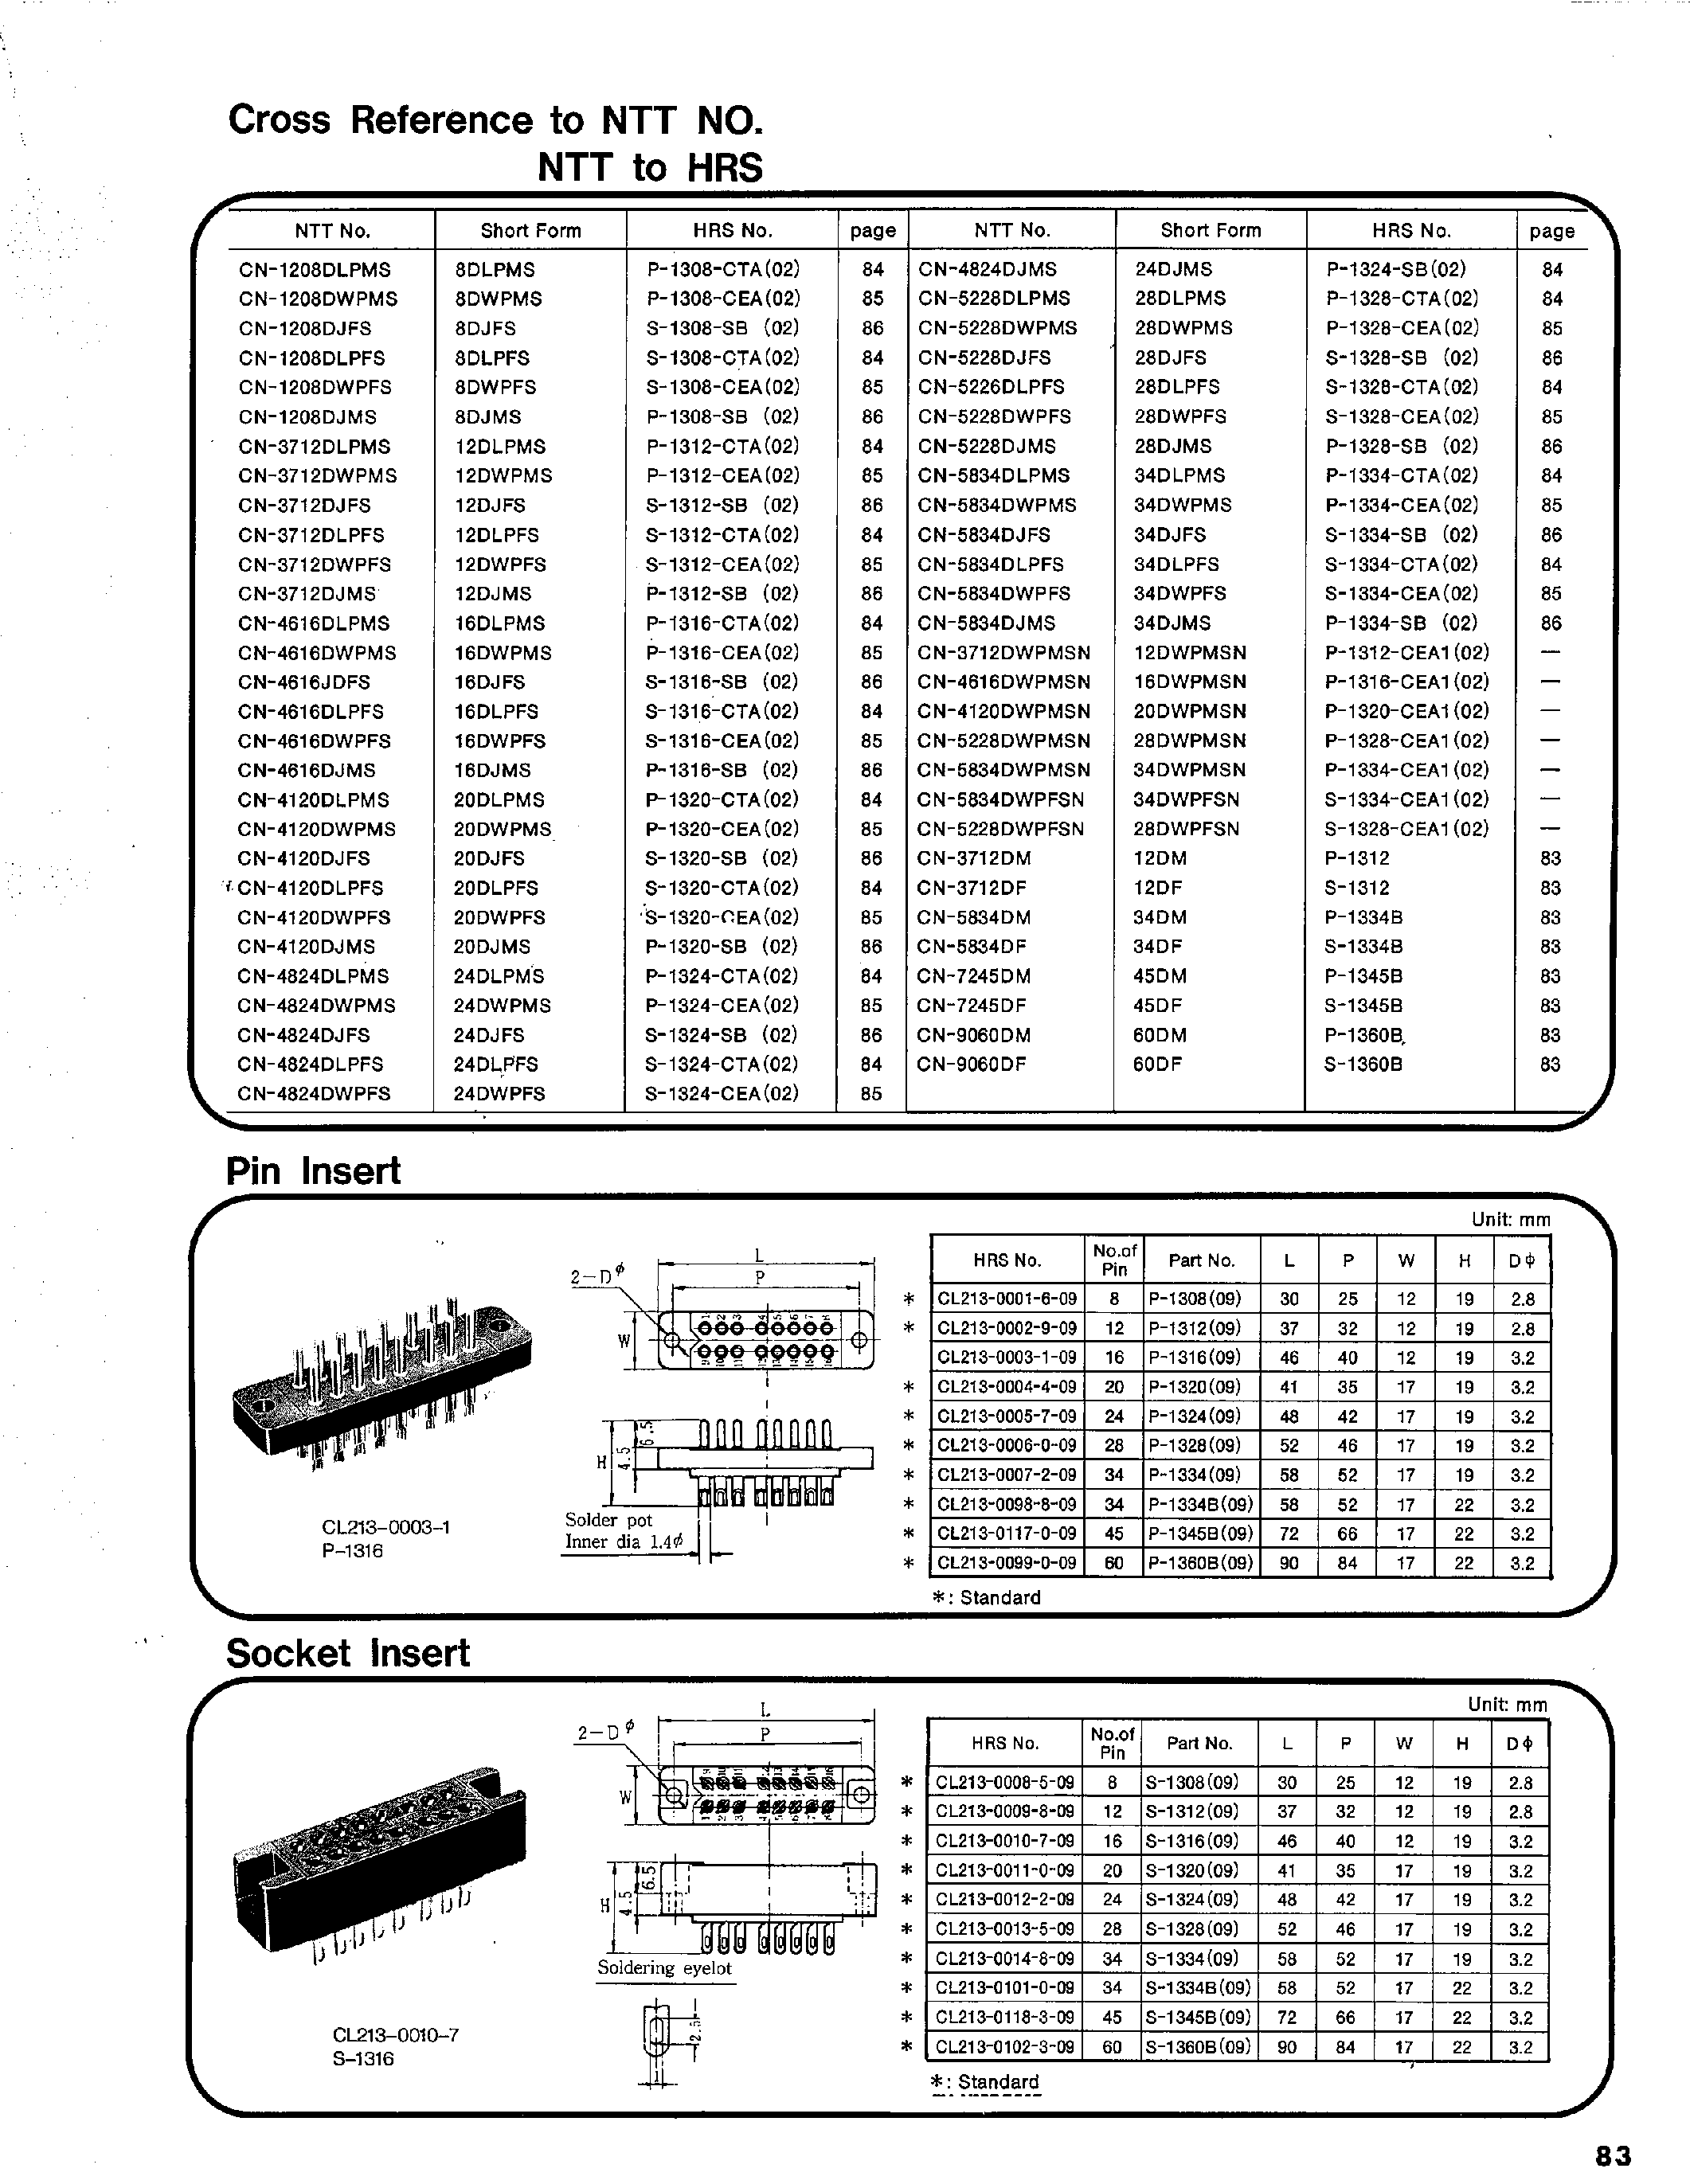 Datasheet P-1334W-H - 1300 SERIES RECTANGULAR CONNECTORS page 2